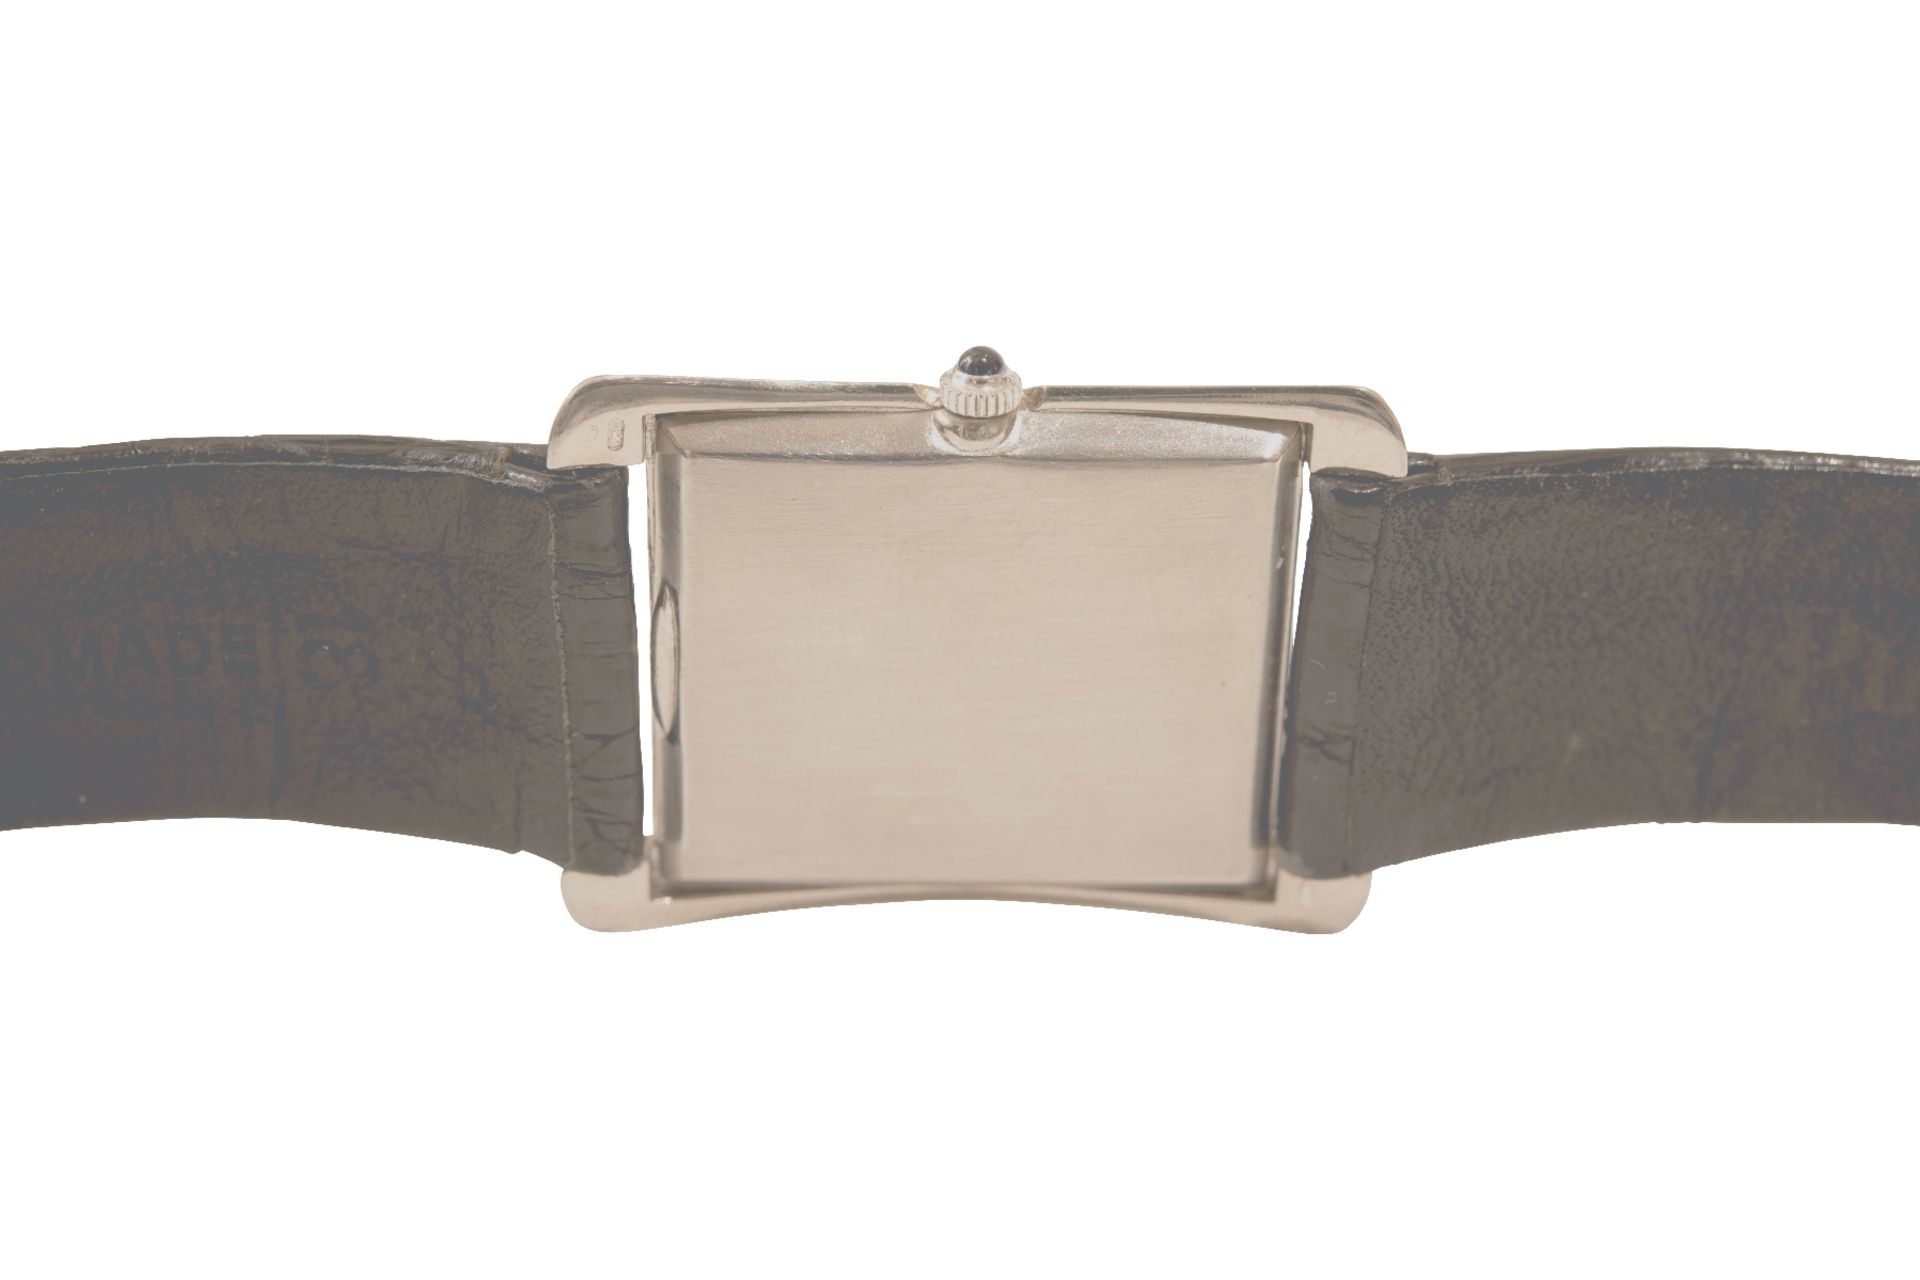 PIAGET SWISS Armbanduhr  | PIAGET SWISS Wrist Watch  - Bild 5 aus 6